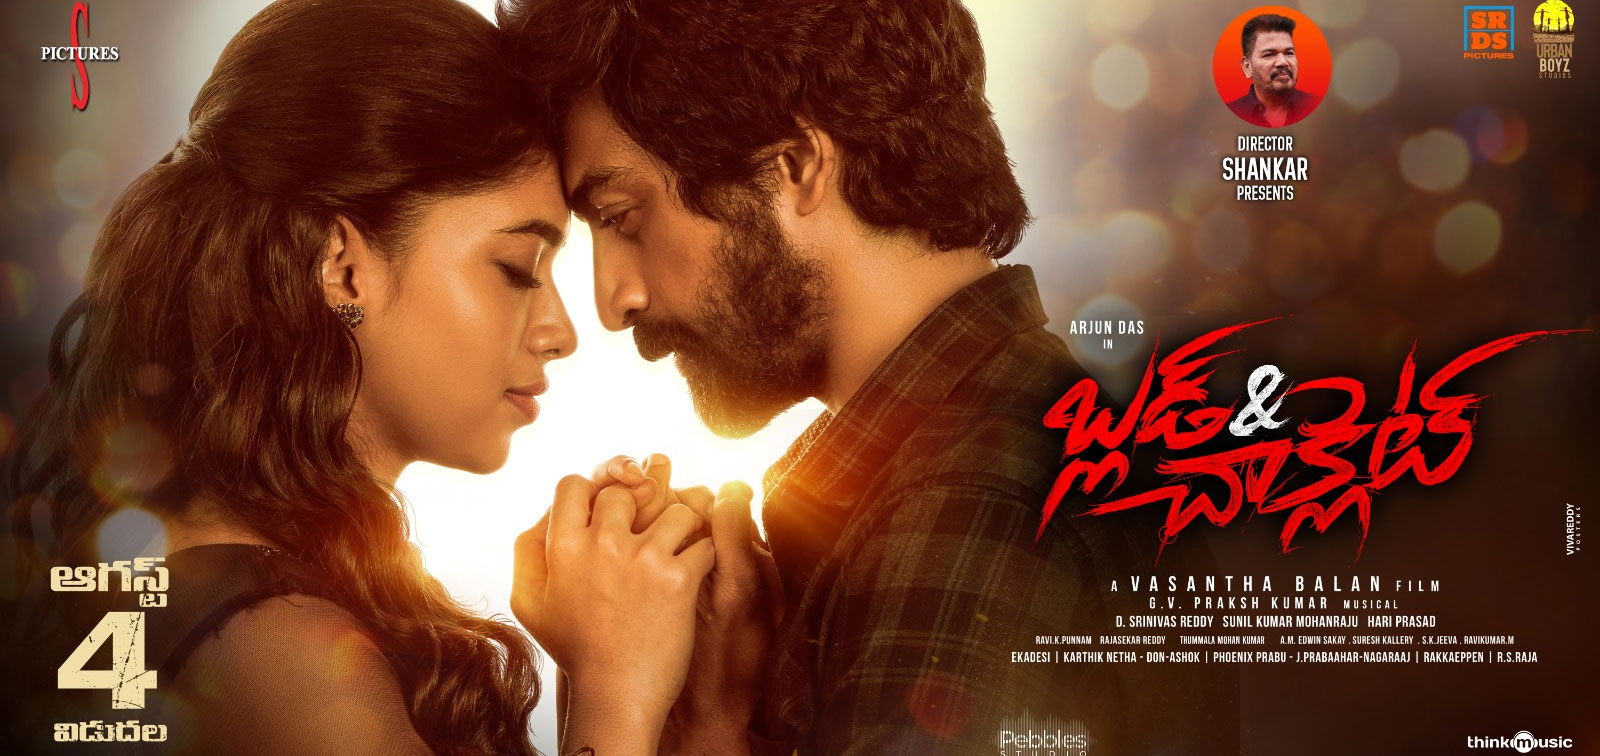 Blood and Chocolate | Telugu Movie | nowrunning